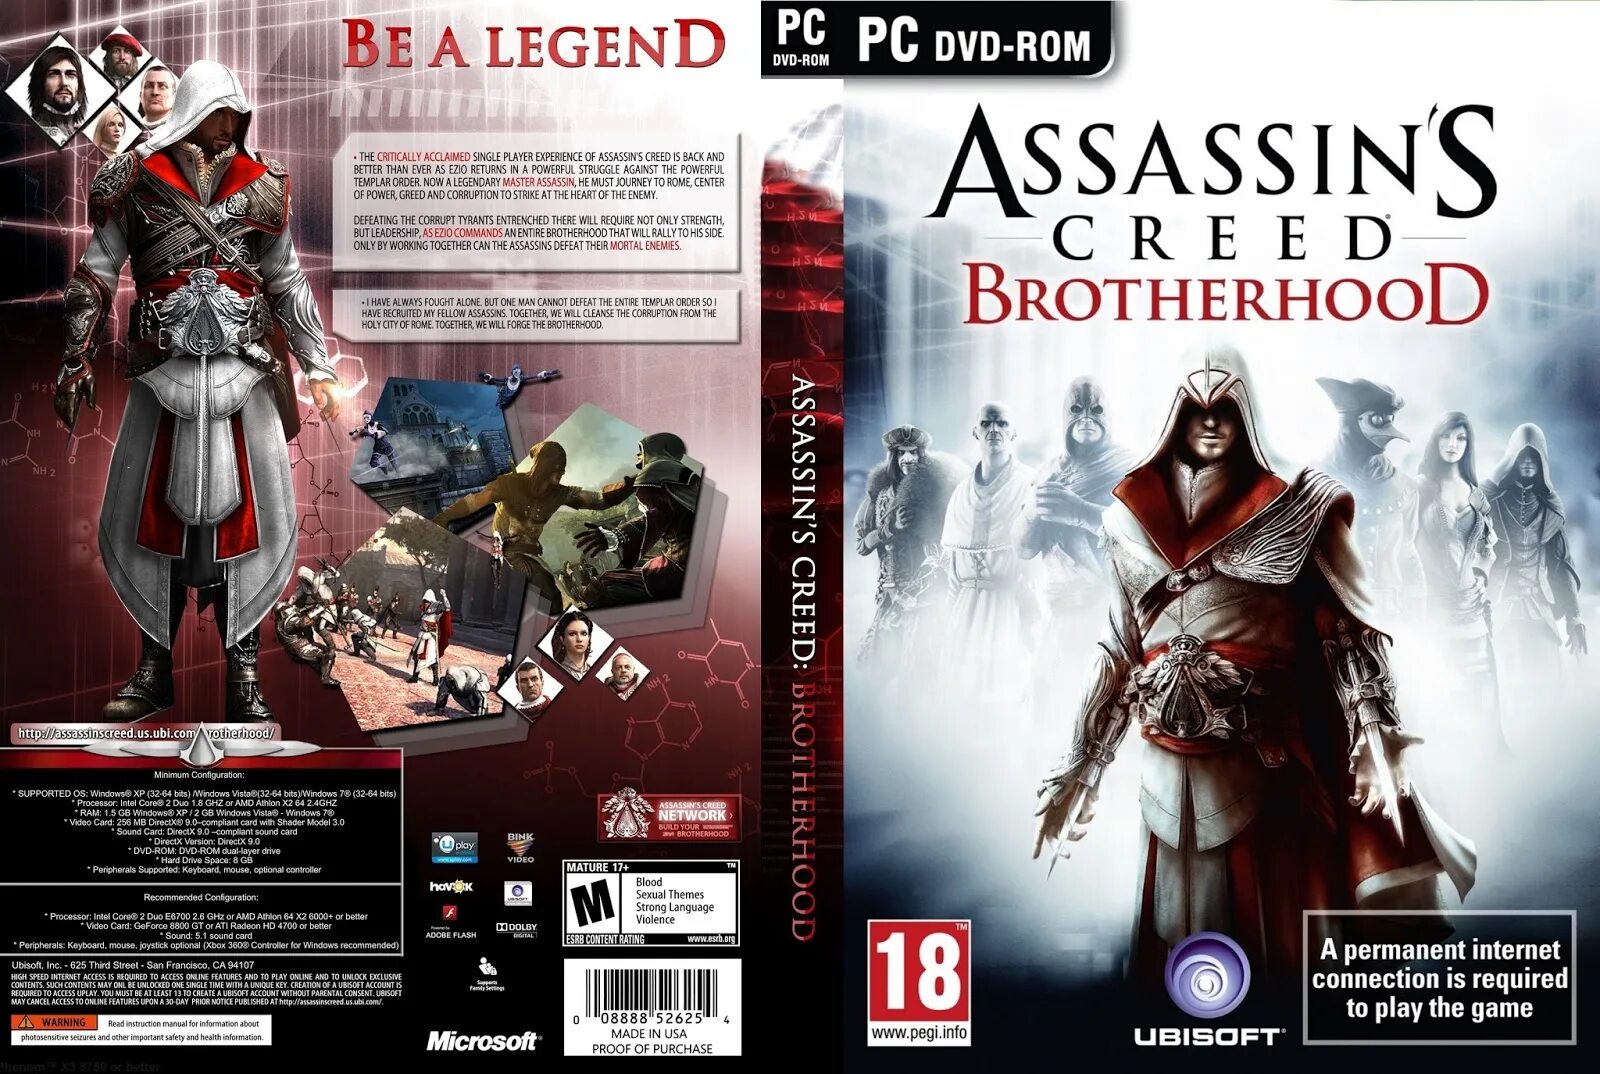 Игры ассасин крид братство. Ассасин Крид братство крови обложка. Обложка ассасин бразерхуд. Диск с игрой ассасин Крид для ПК. Assassins Creed Brotherhood Xbox 360 обложка.